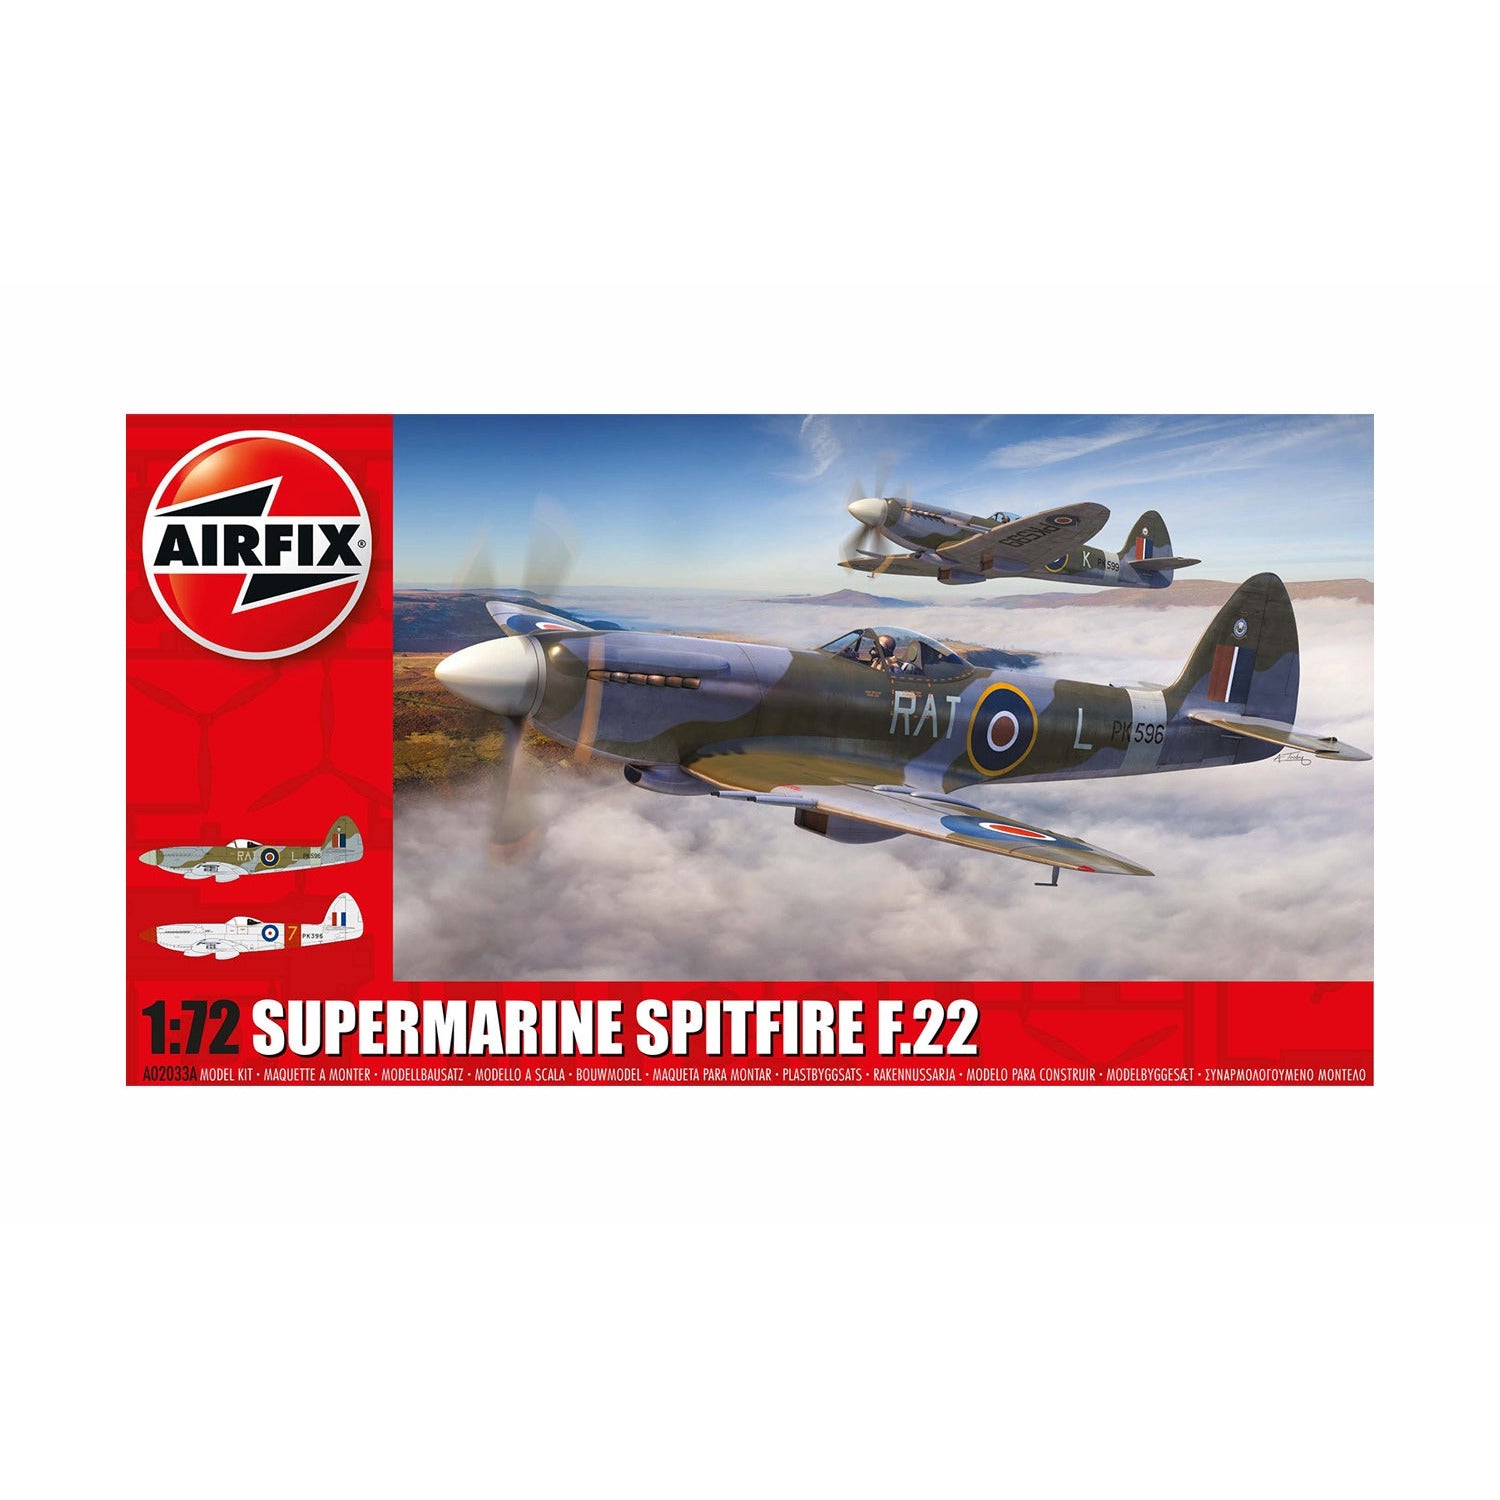 Supermarine Spitfire F.22 1/72 #02033A by Airfix